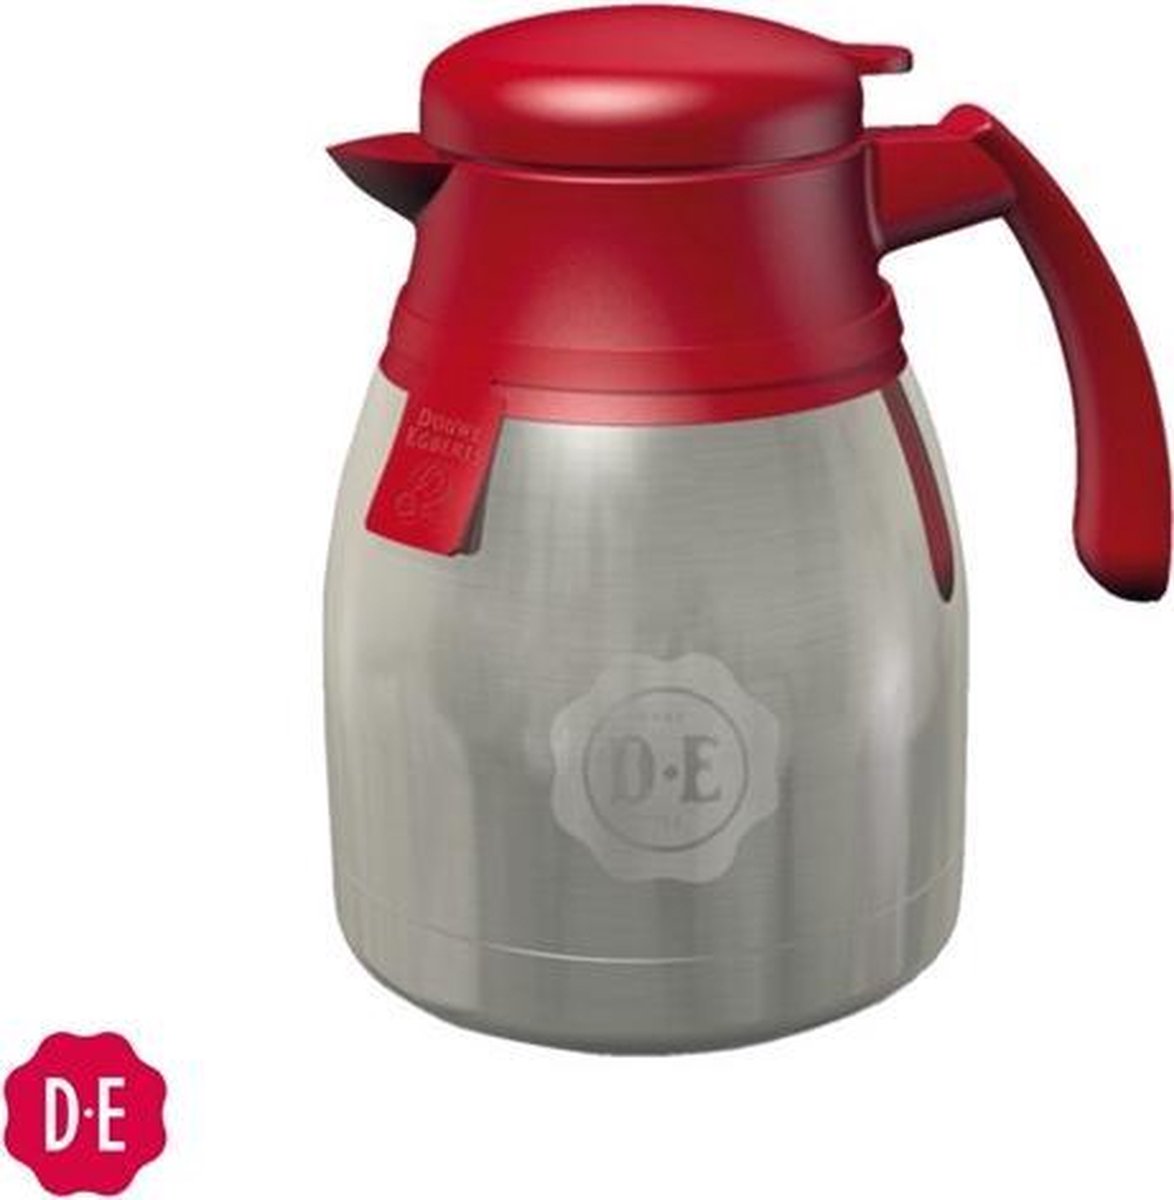 koffiekan Douwe Egberts 0,9 liter bol.com